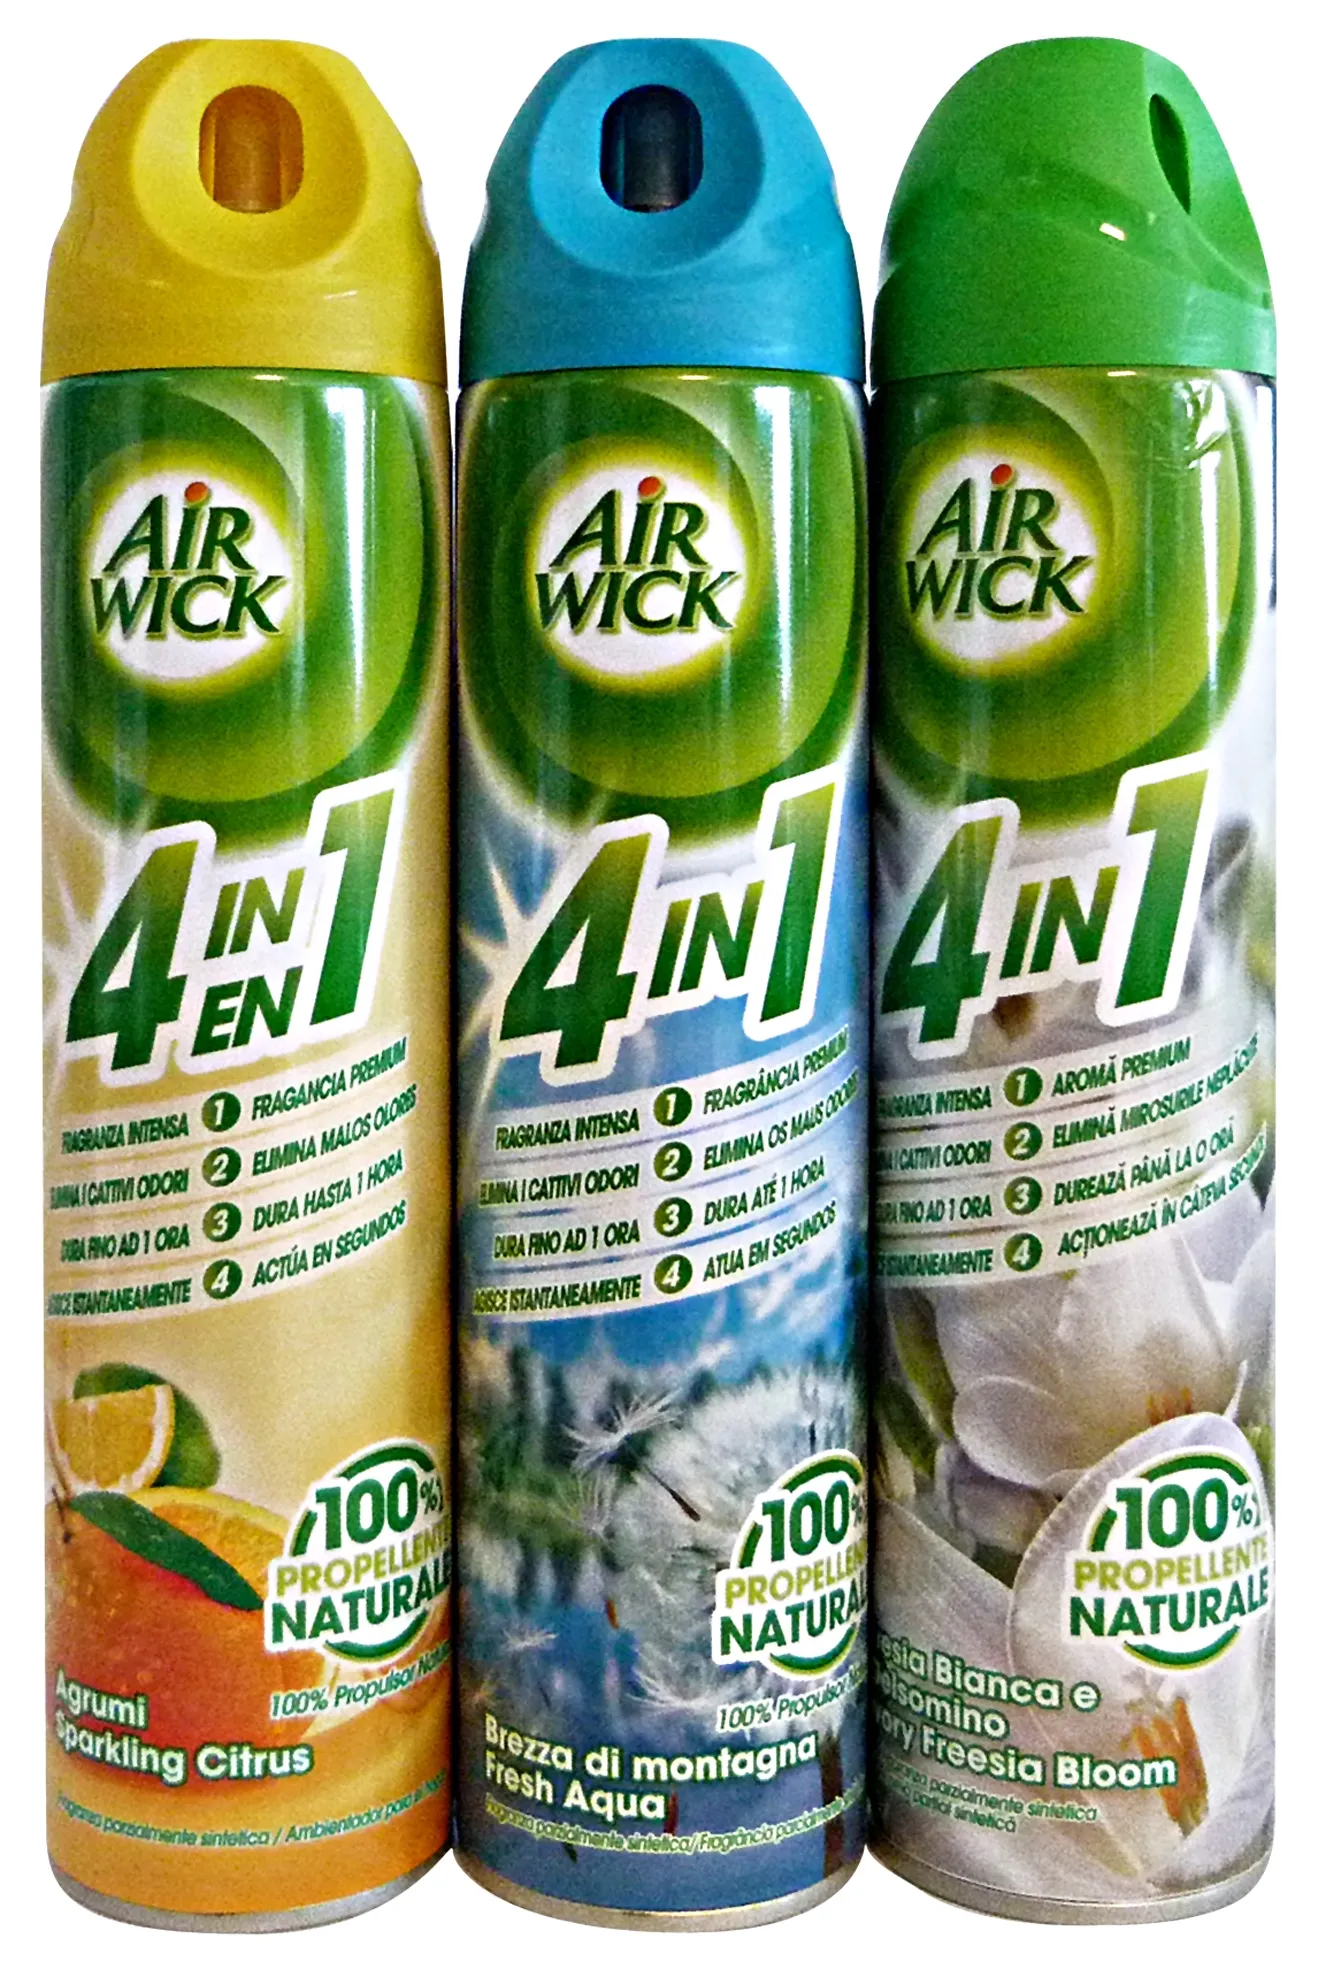 "AIR WICK Spray Misto 240 ml Deodorante Candele E Profumatori"